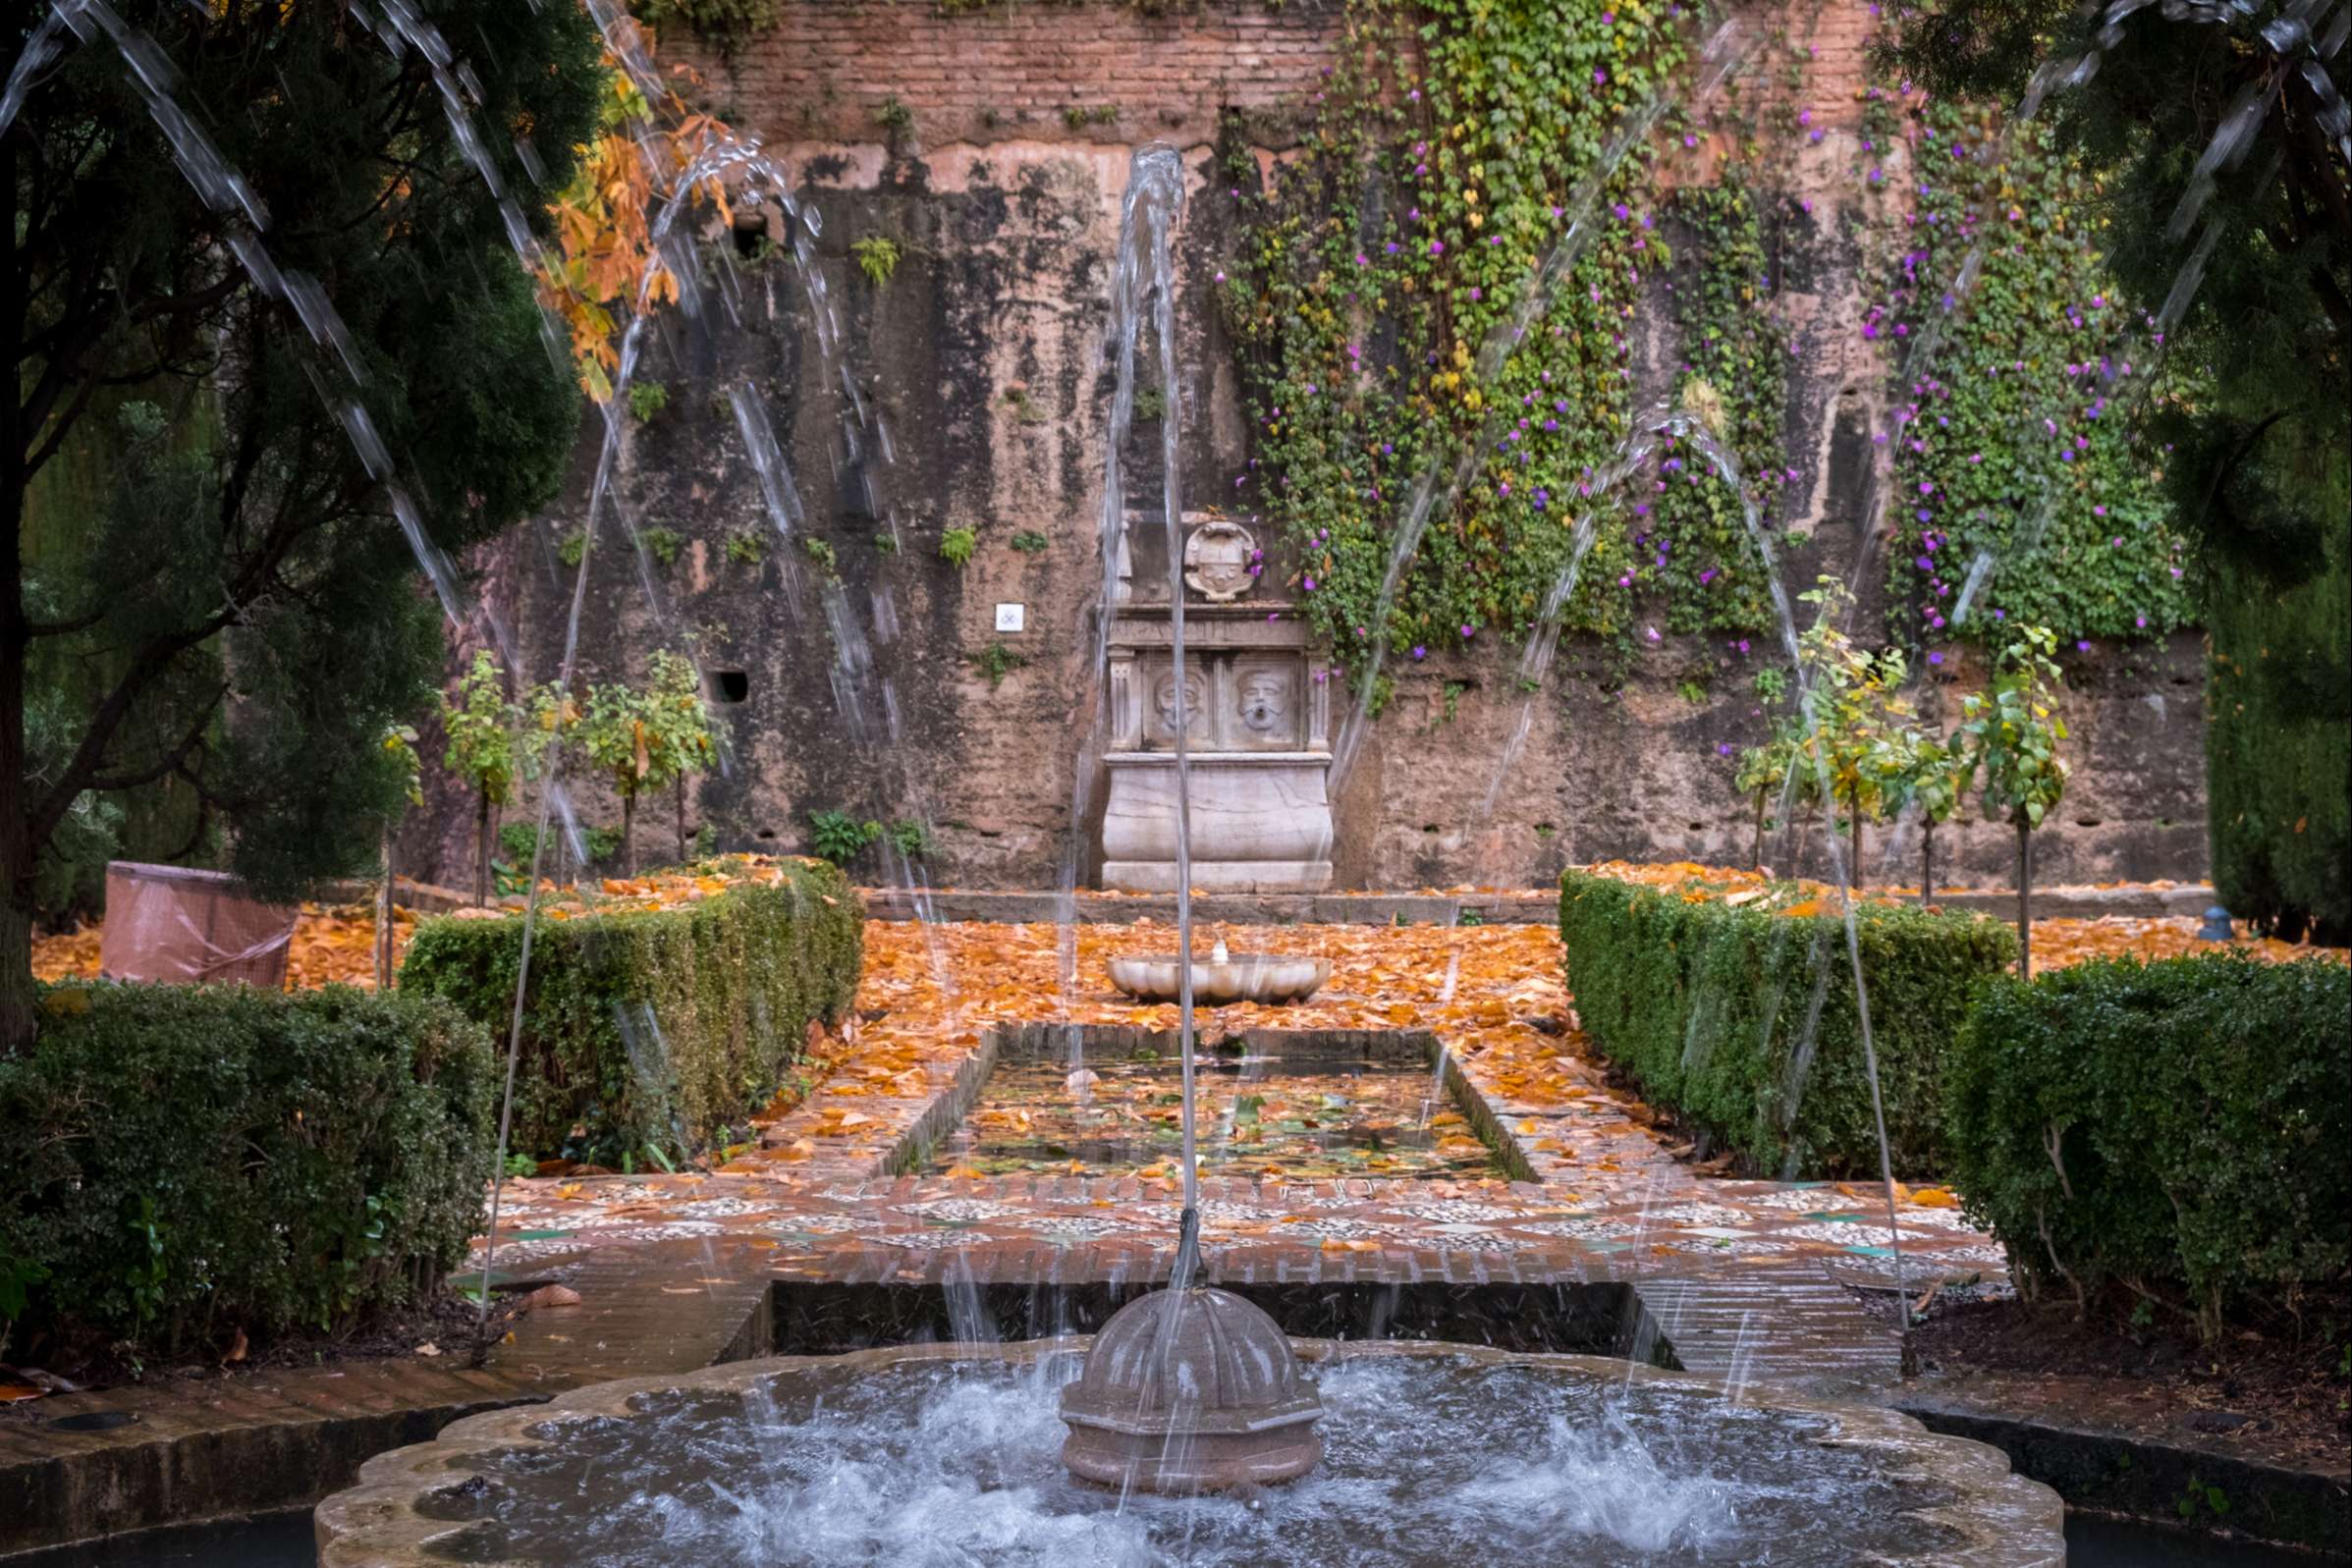 A fountain in the garden of Generalife, The Alhambra, Granada